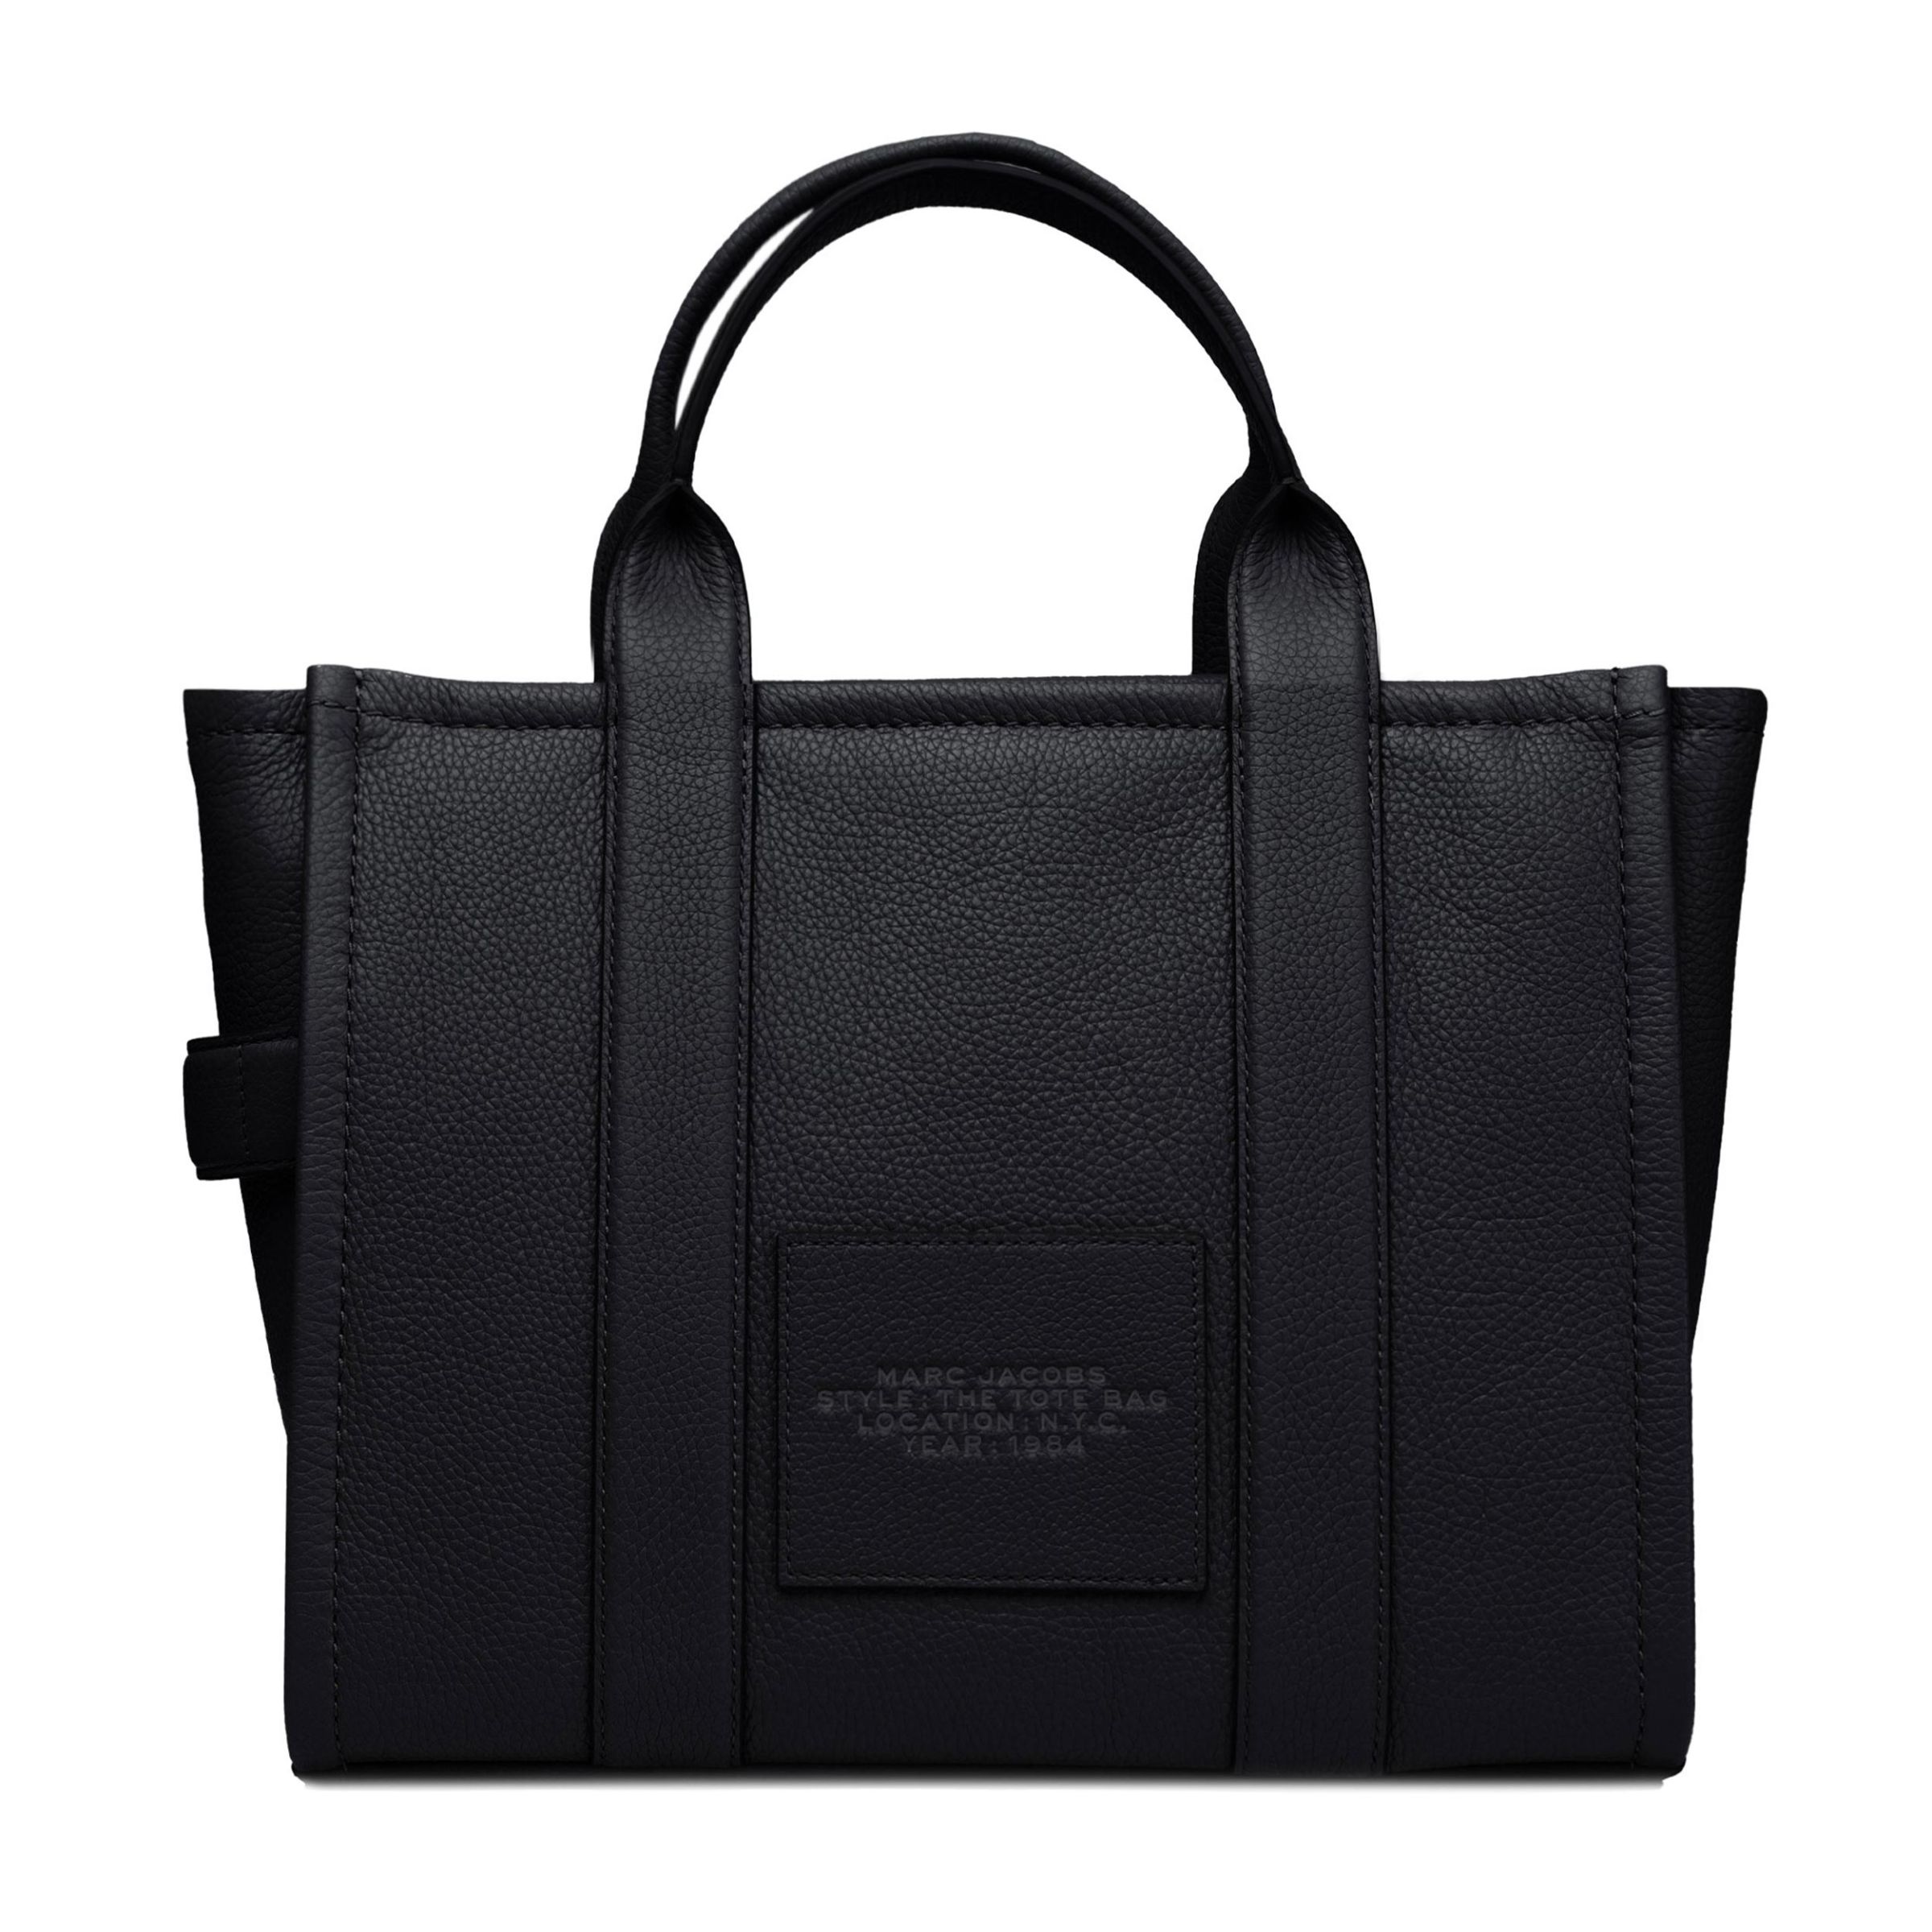 Сумка Marc Jacobs Small Tote Bag черная